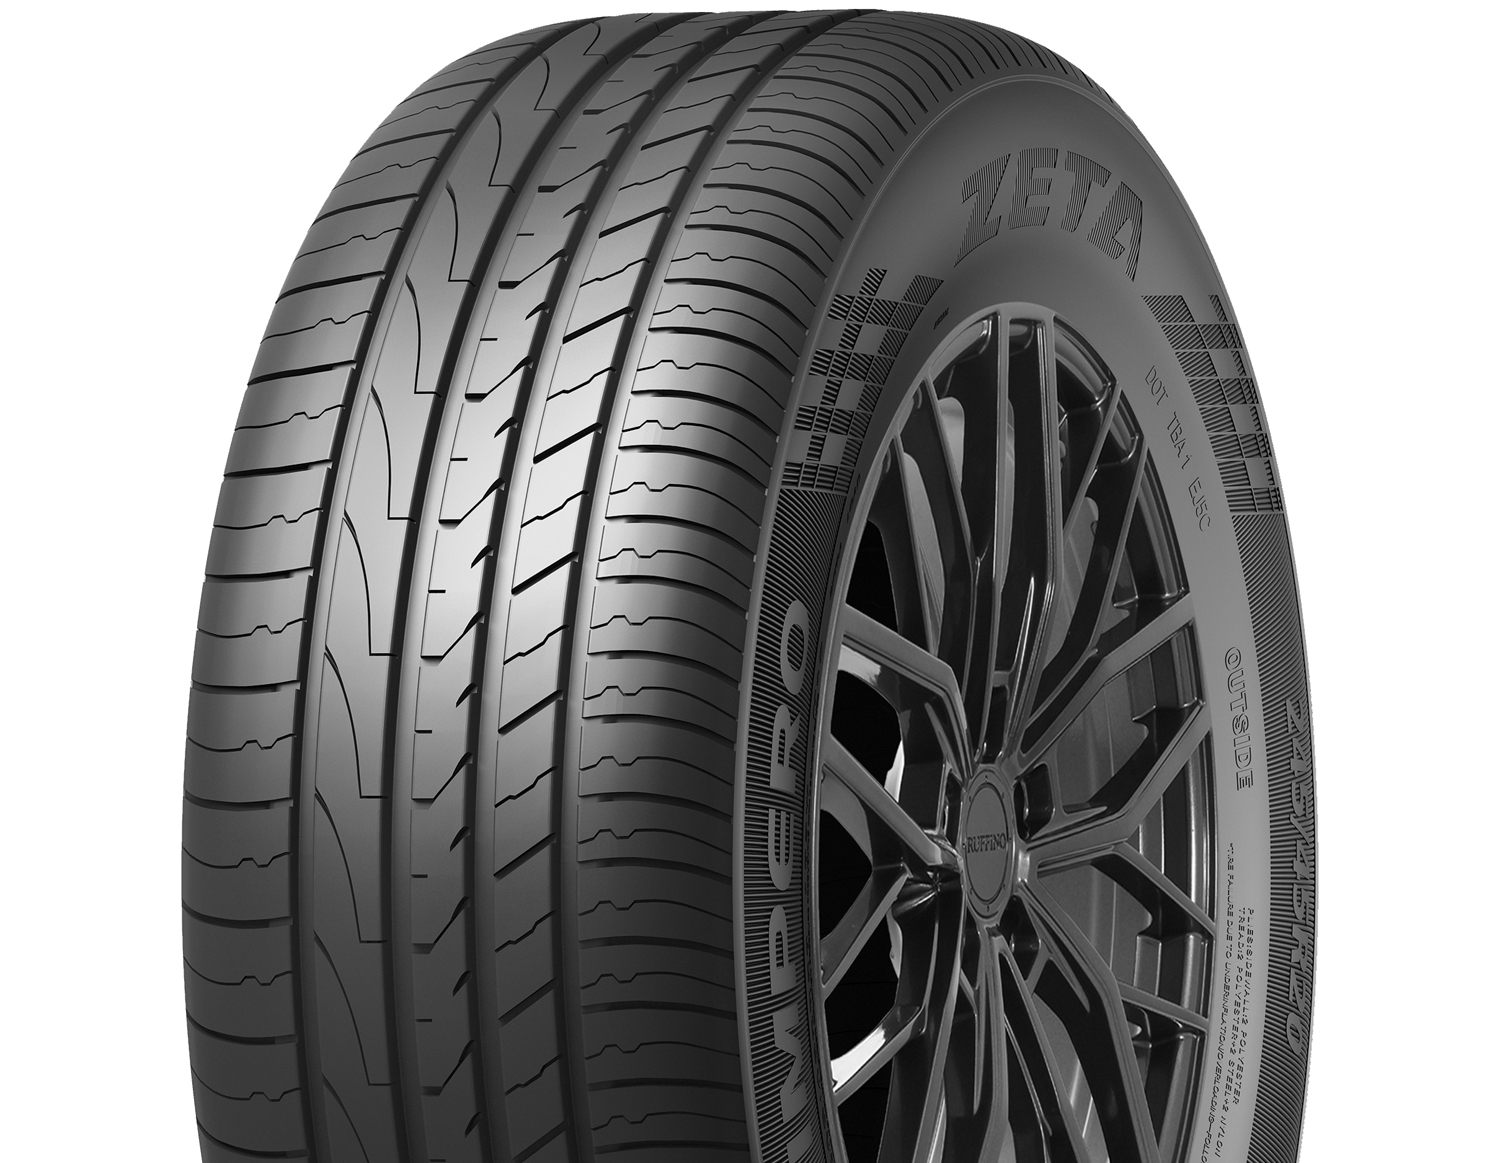 SD International’s growing Zeta brand SUV tyre range